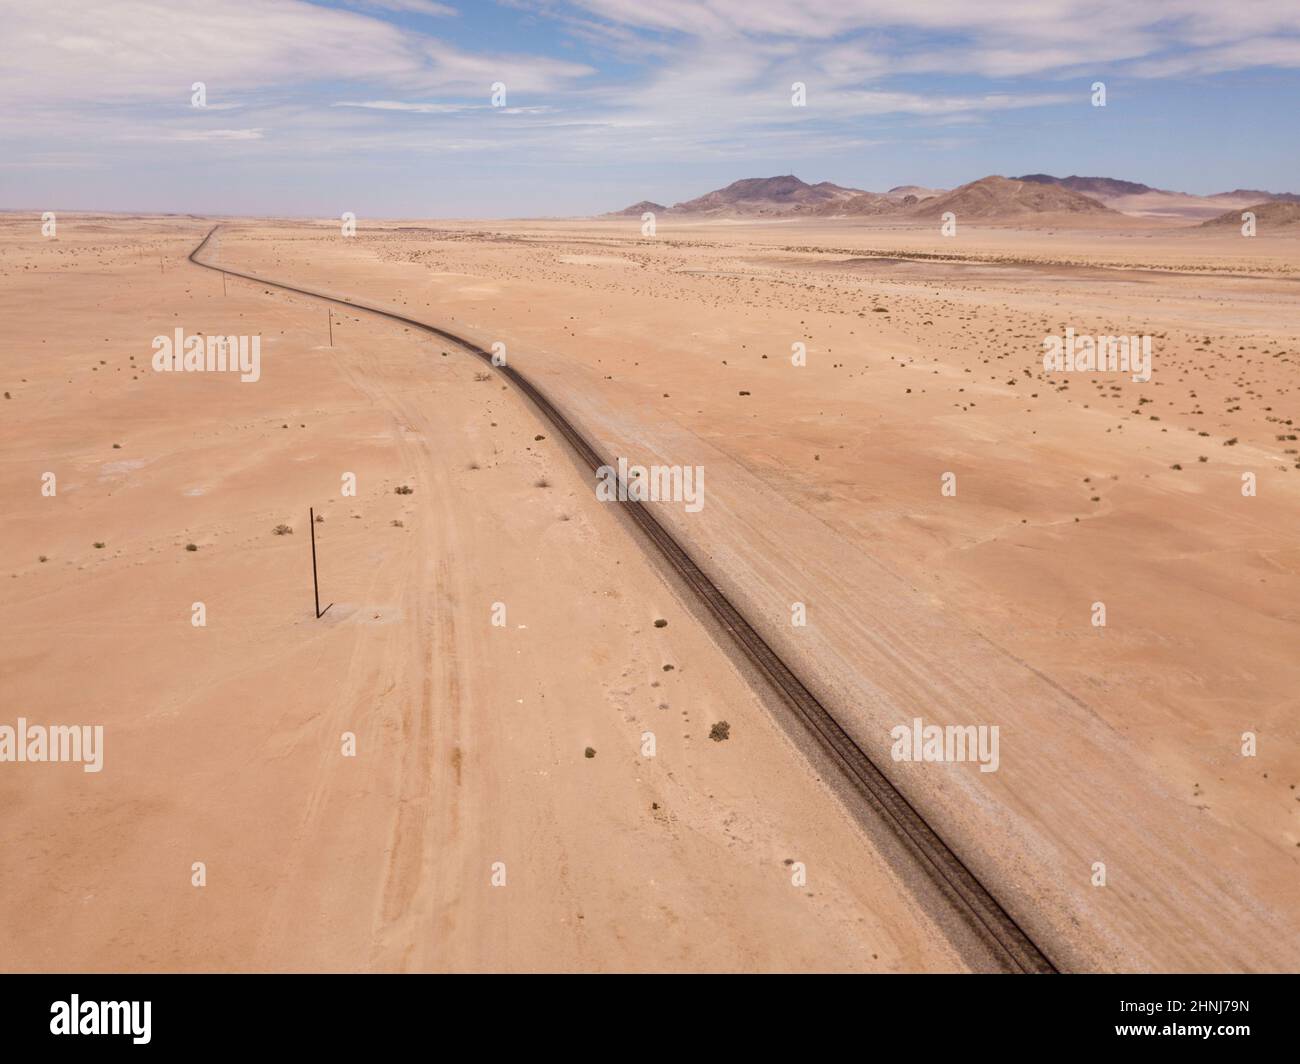 Aerial over railway tracks runnning through the desert Stock Photo